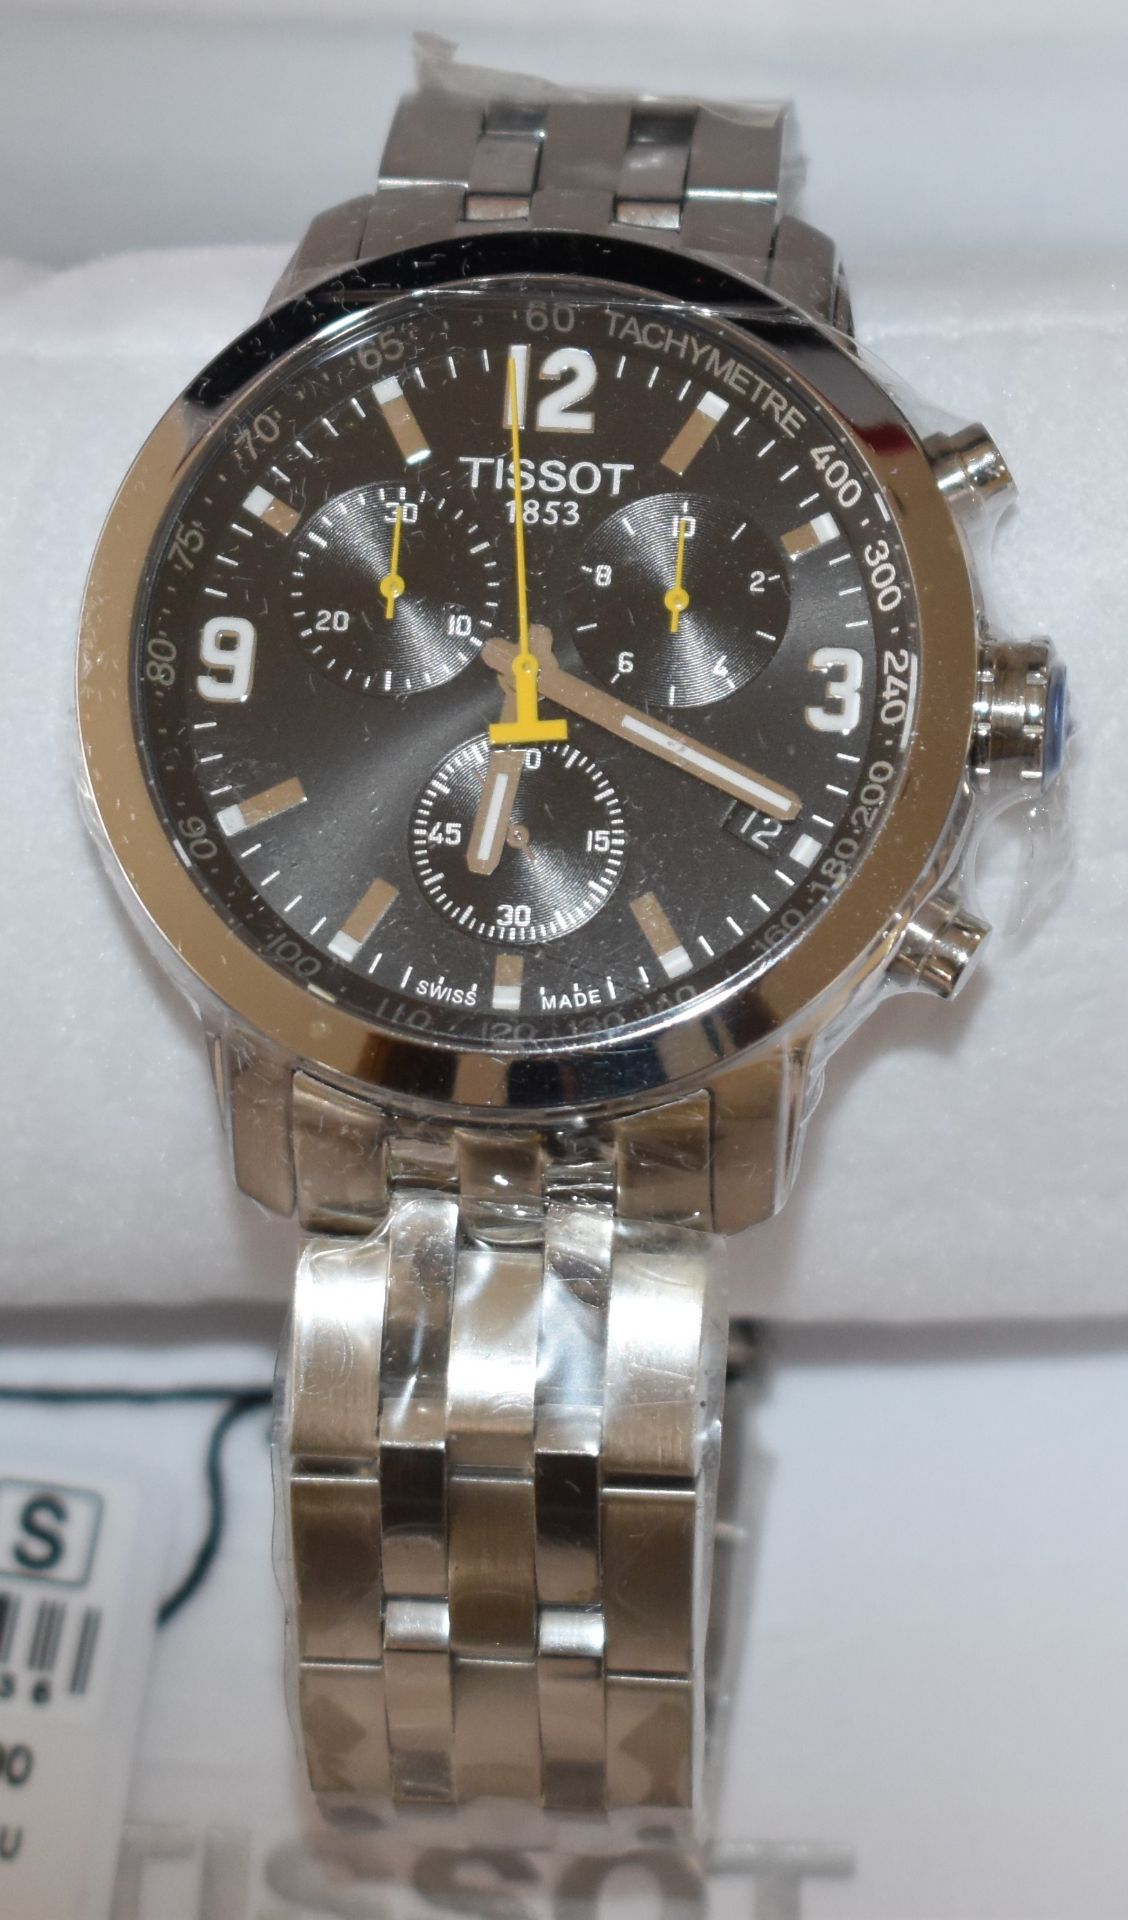 Tissot Men's Watch TO55.417.11.057.00 - Image 2 of 3